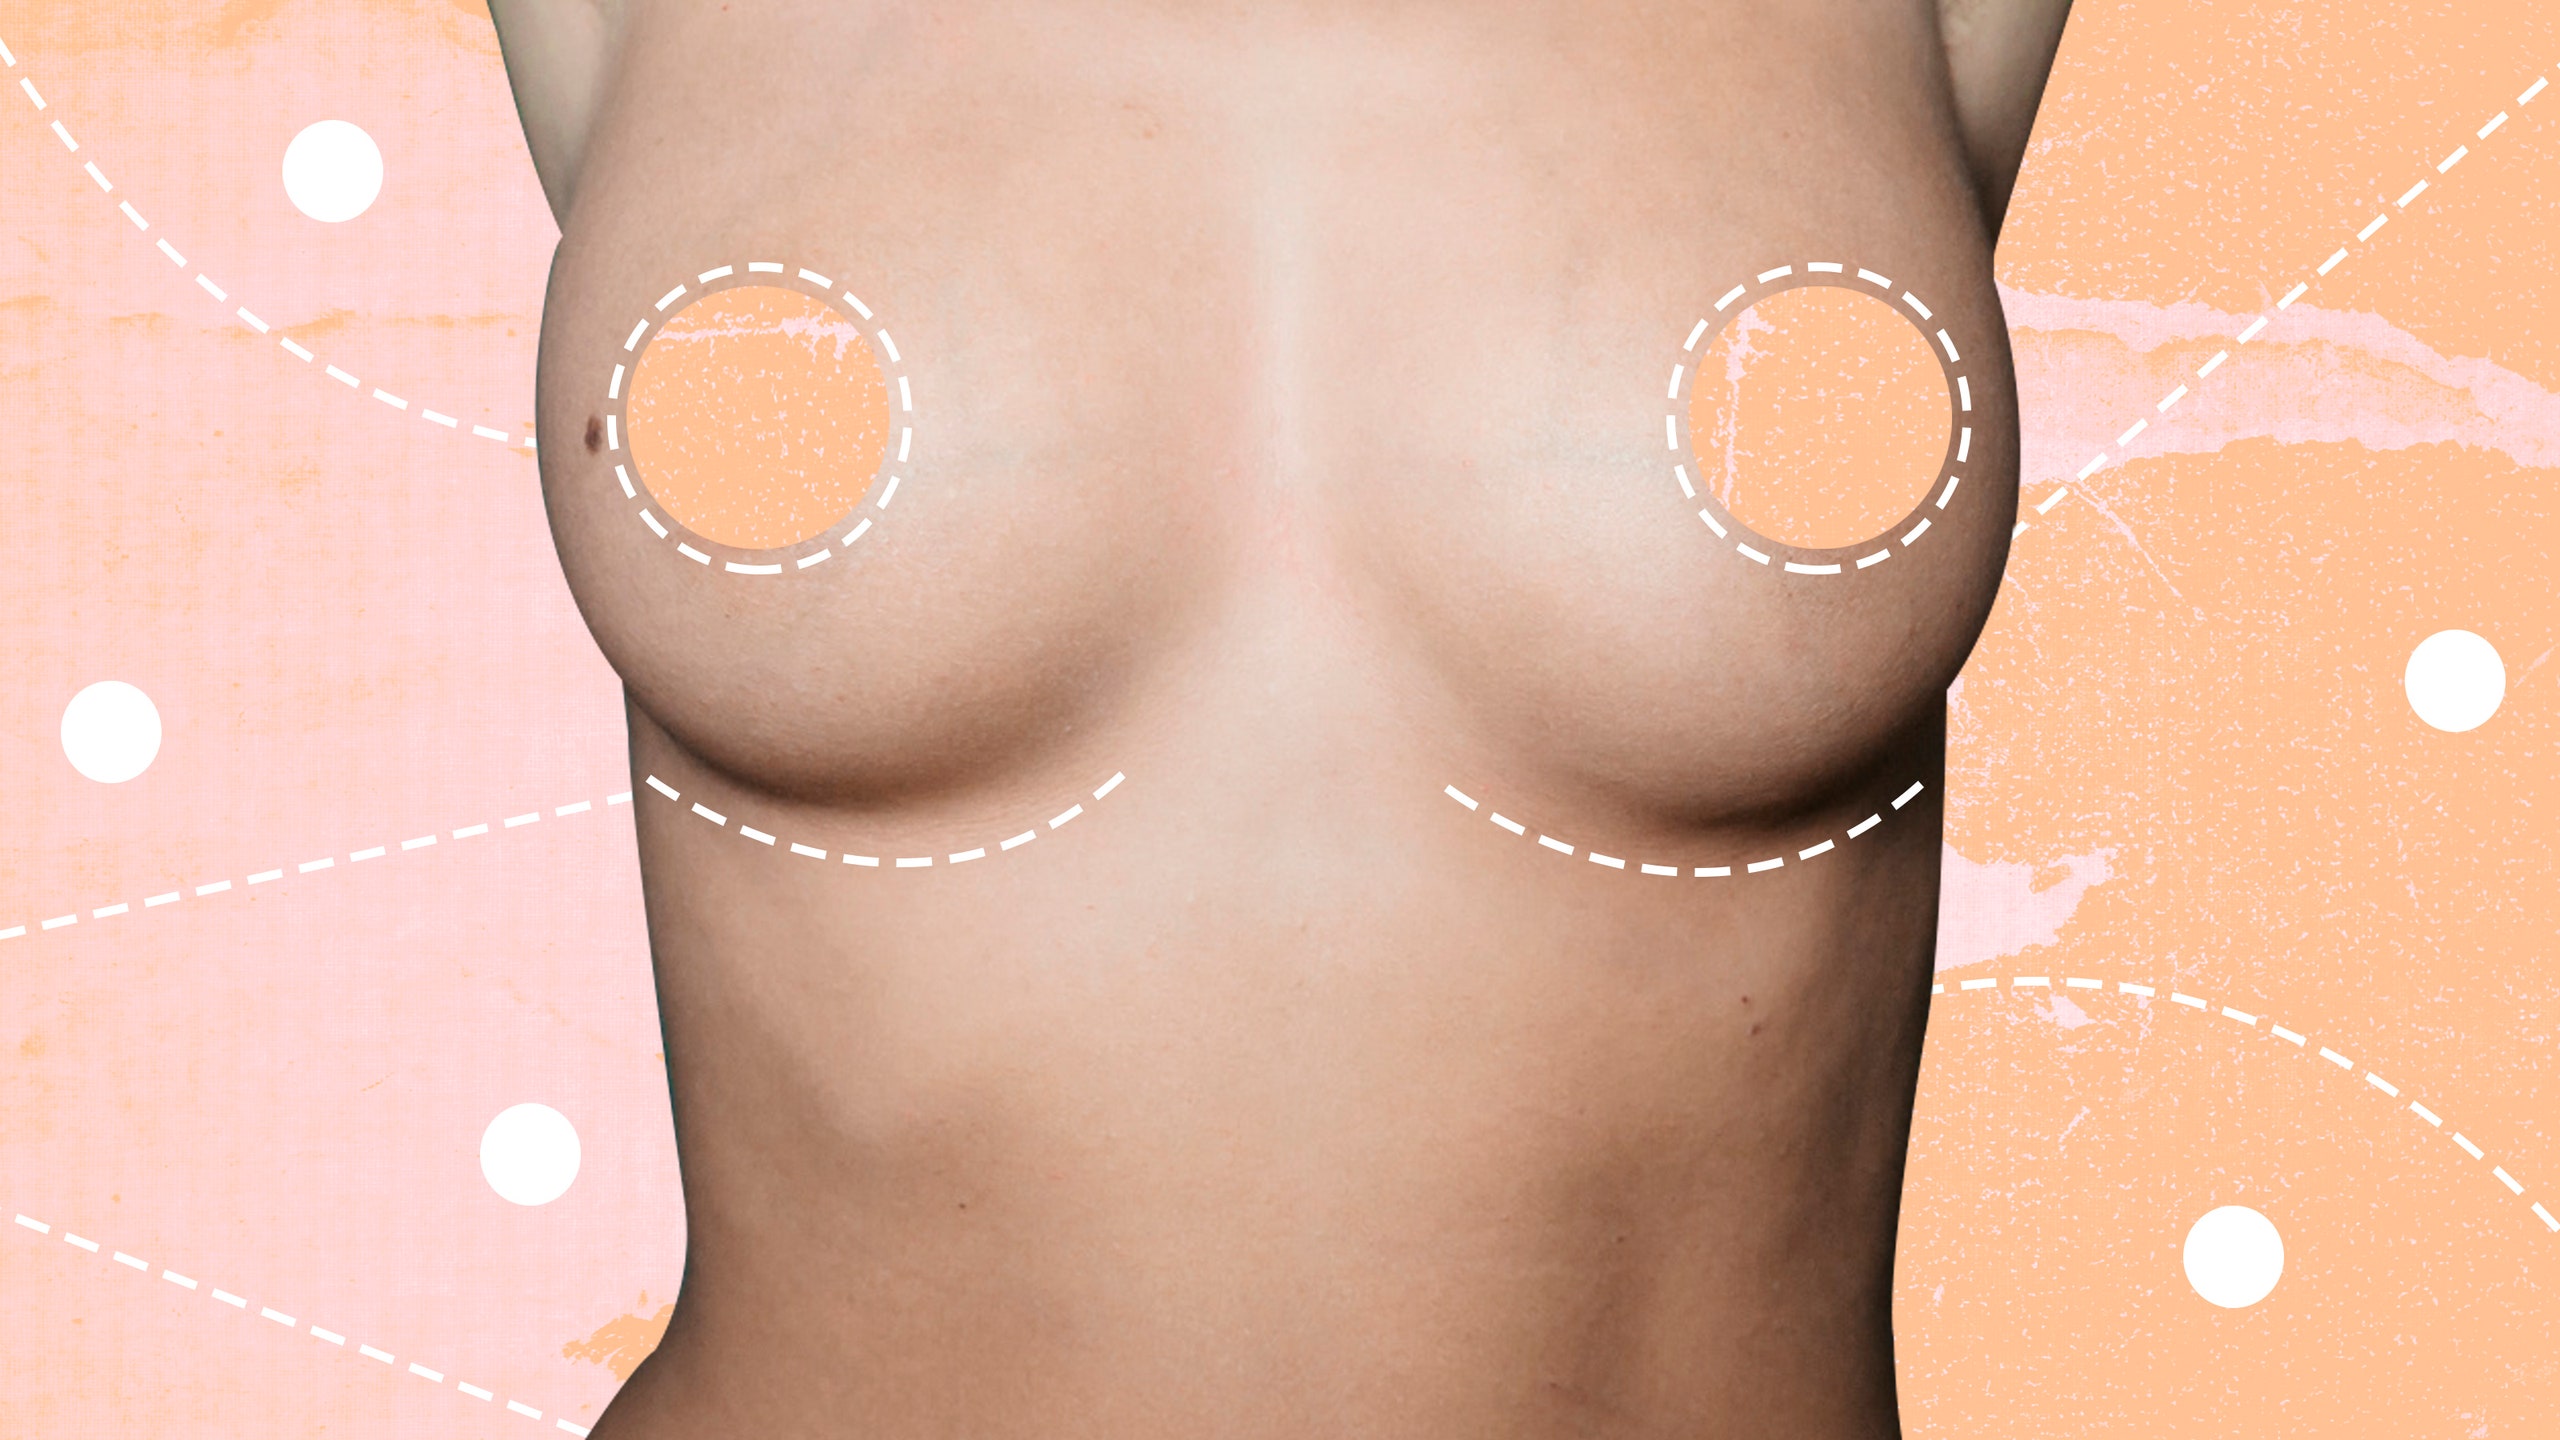 Breast Augmentation1